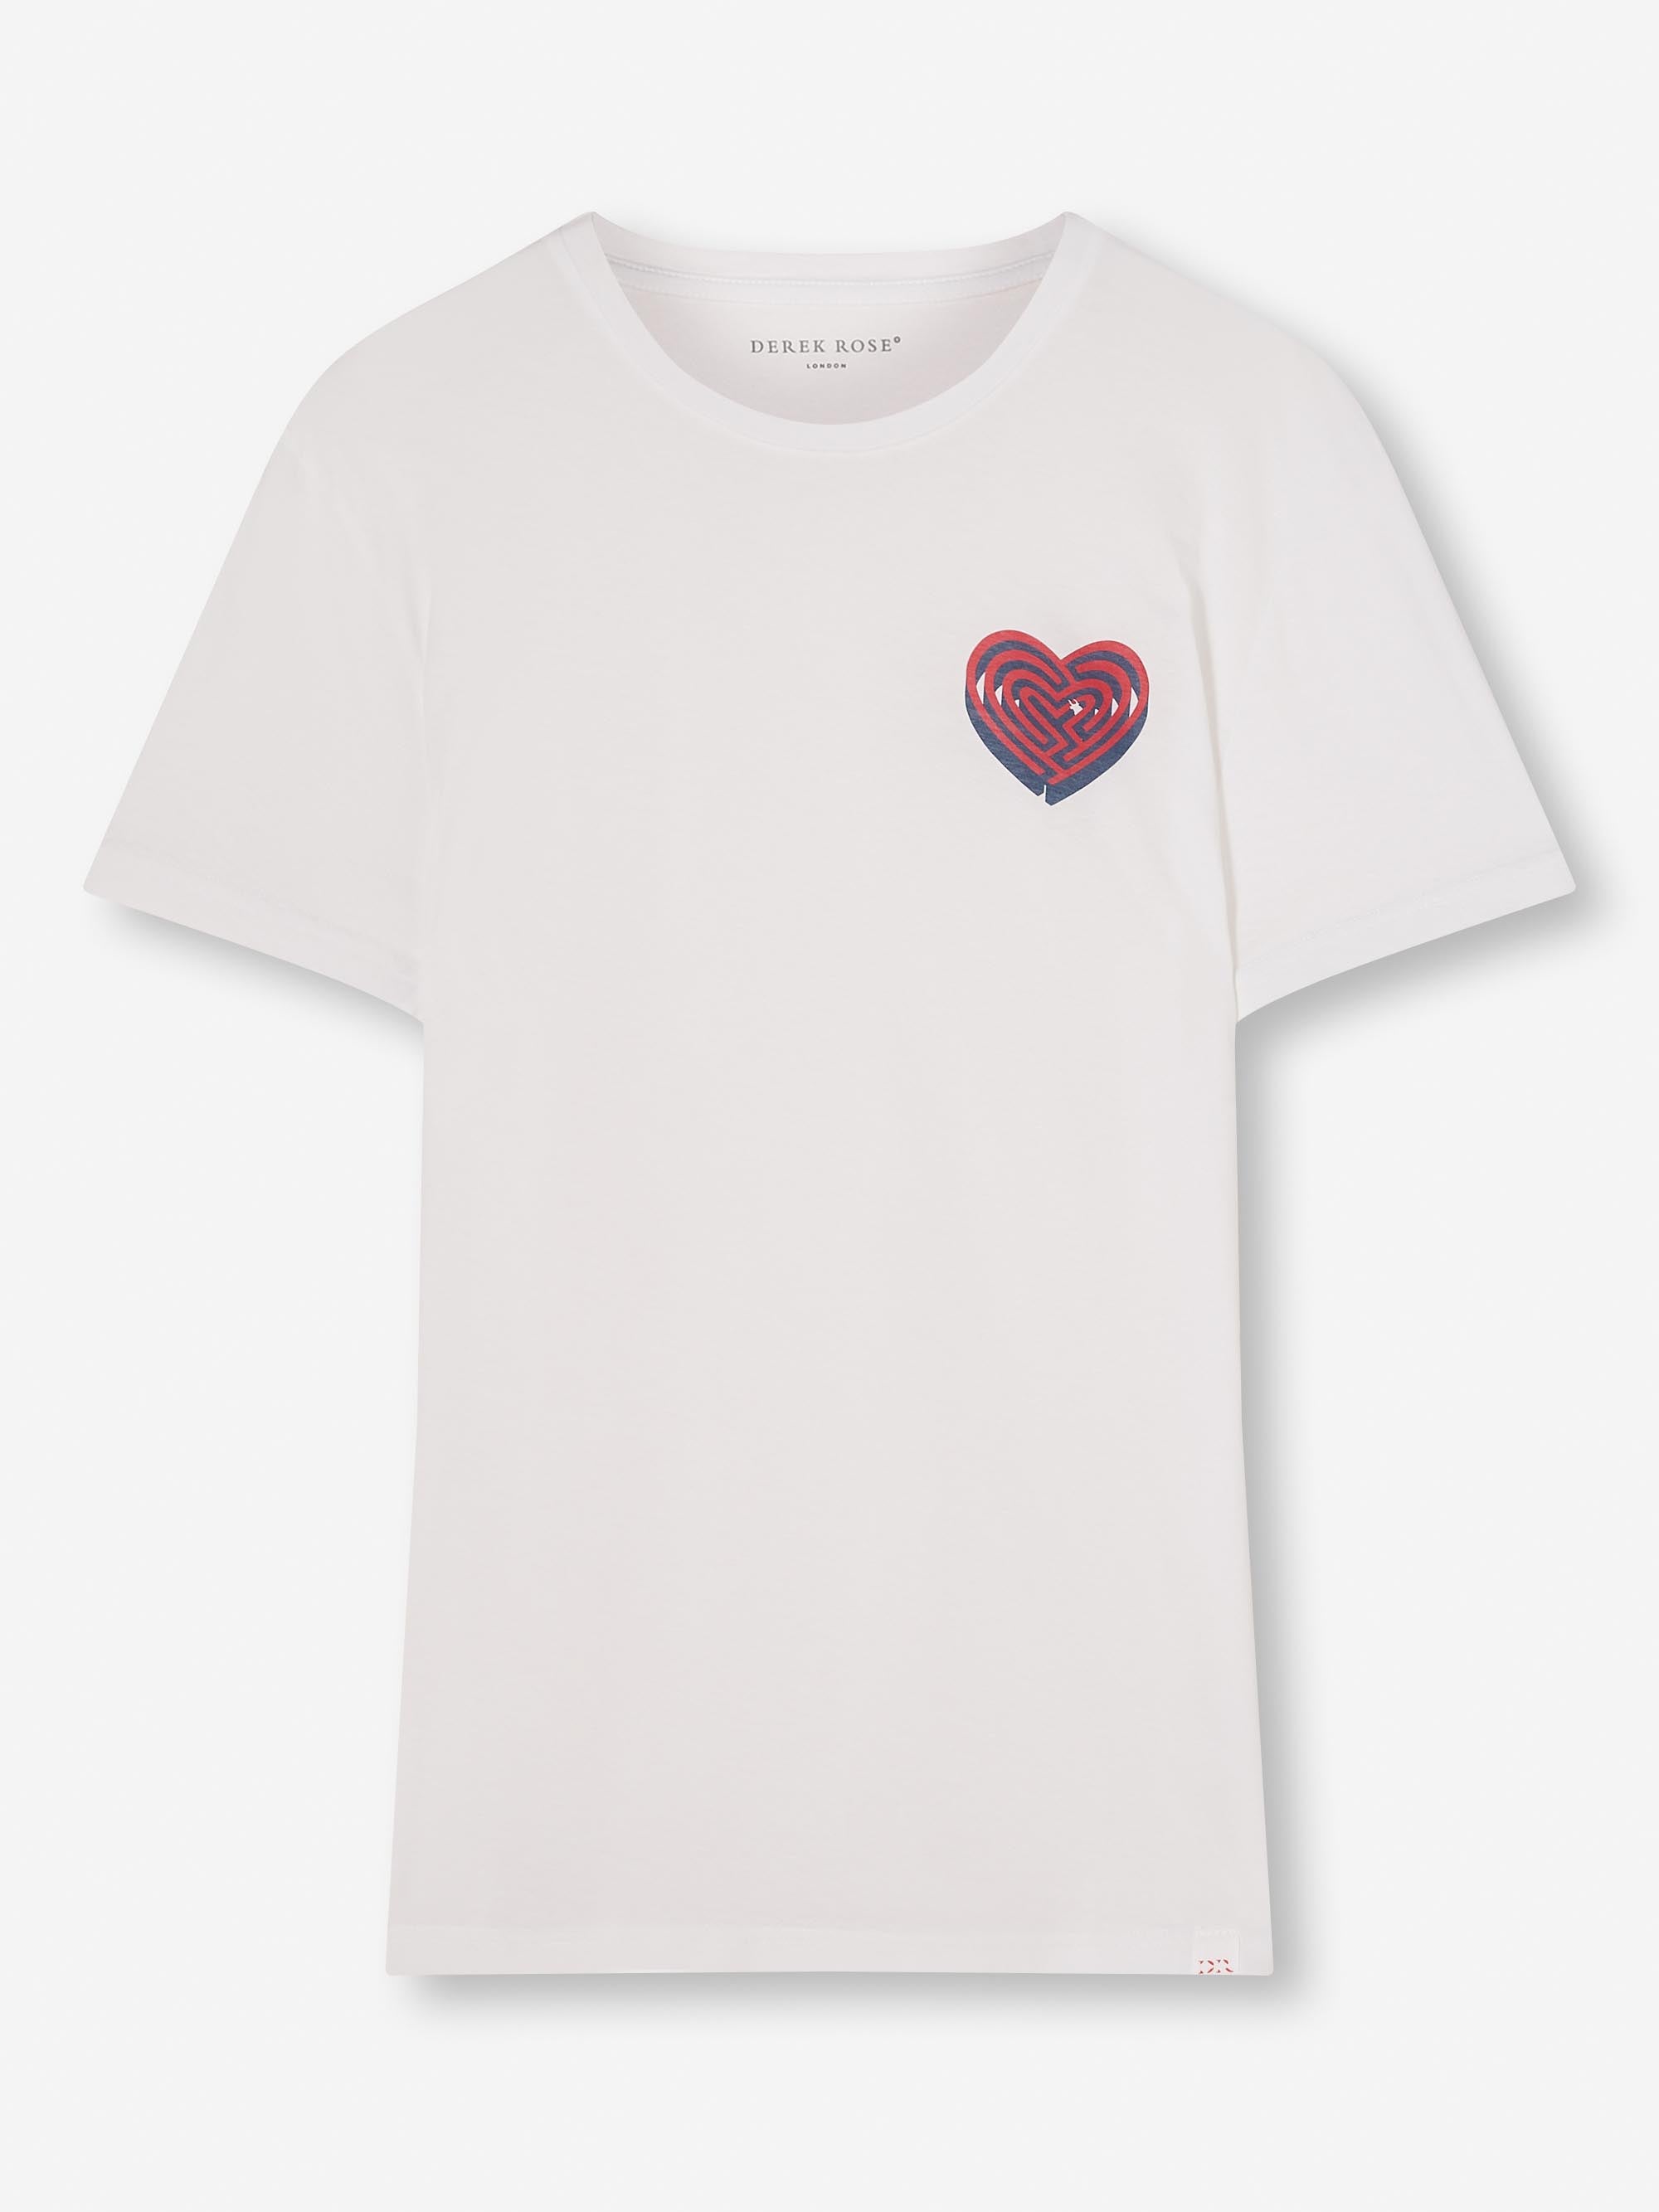 Men's T-Shirt Ripley 21 Pima Cotton White